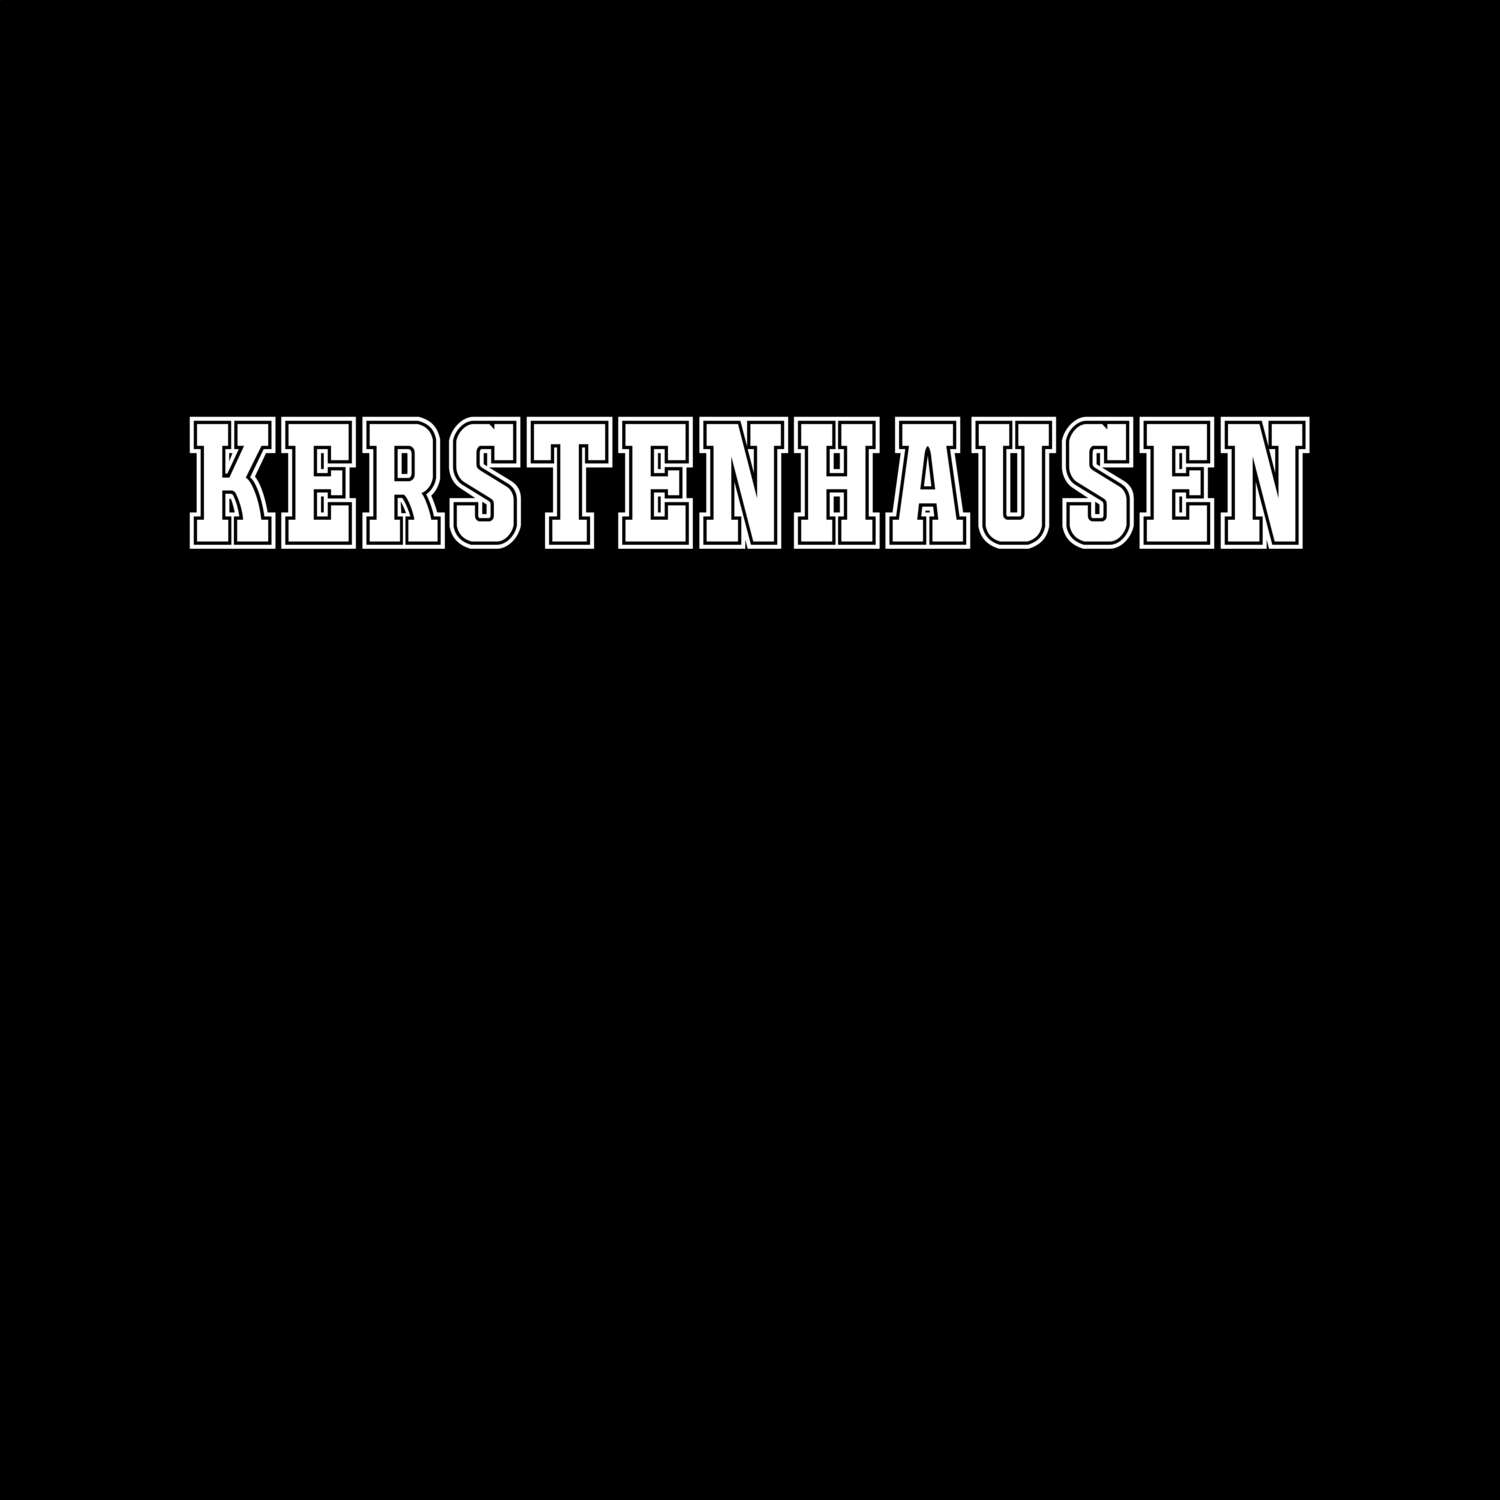 Kerstenhausen T-Shirt »Classic«